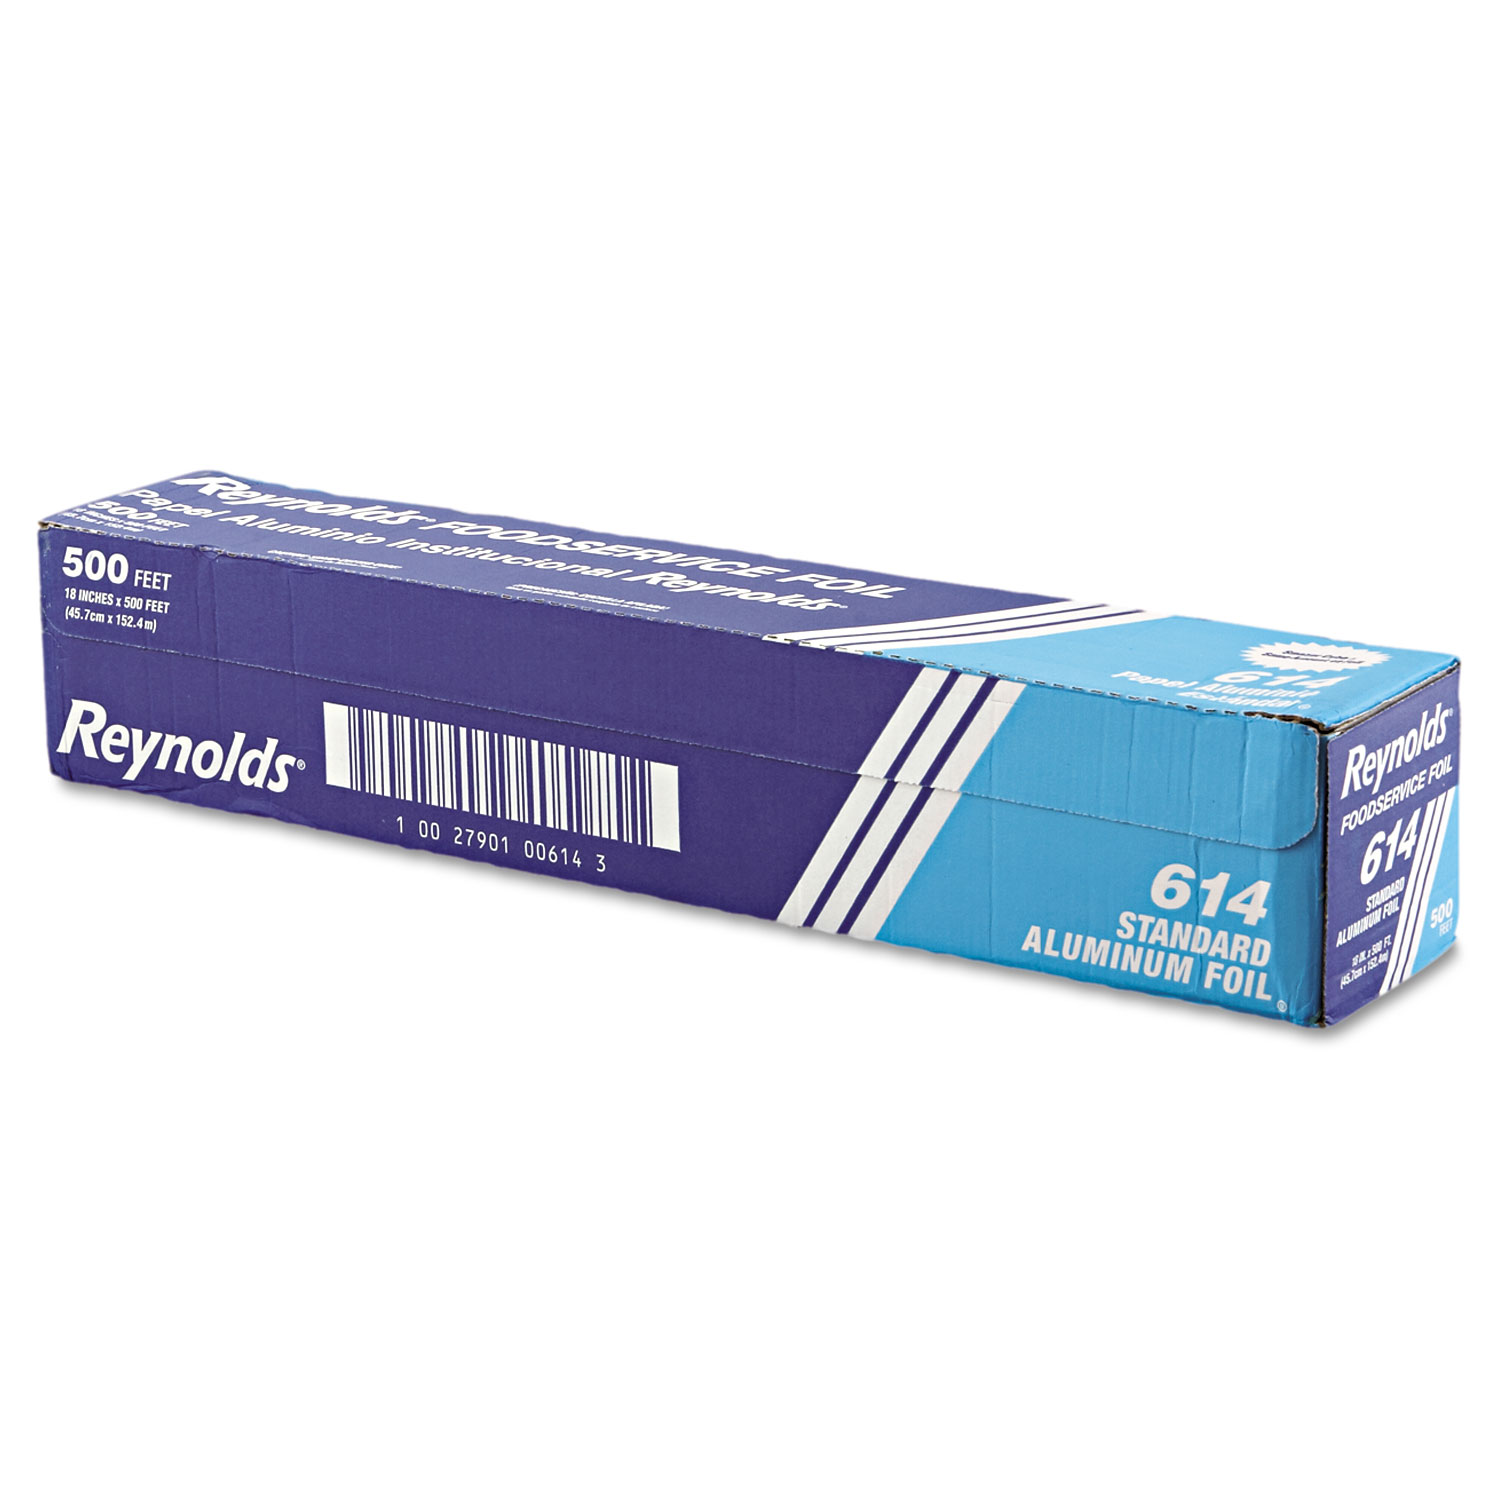  Reynolds Wrap 000000000000000614 Standard Aluminum Foil Roll, 18 x 500 ft, Silver (RFP614) 